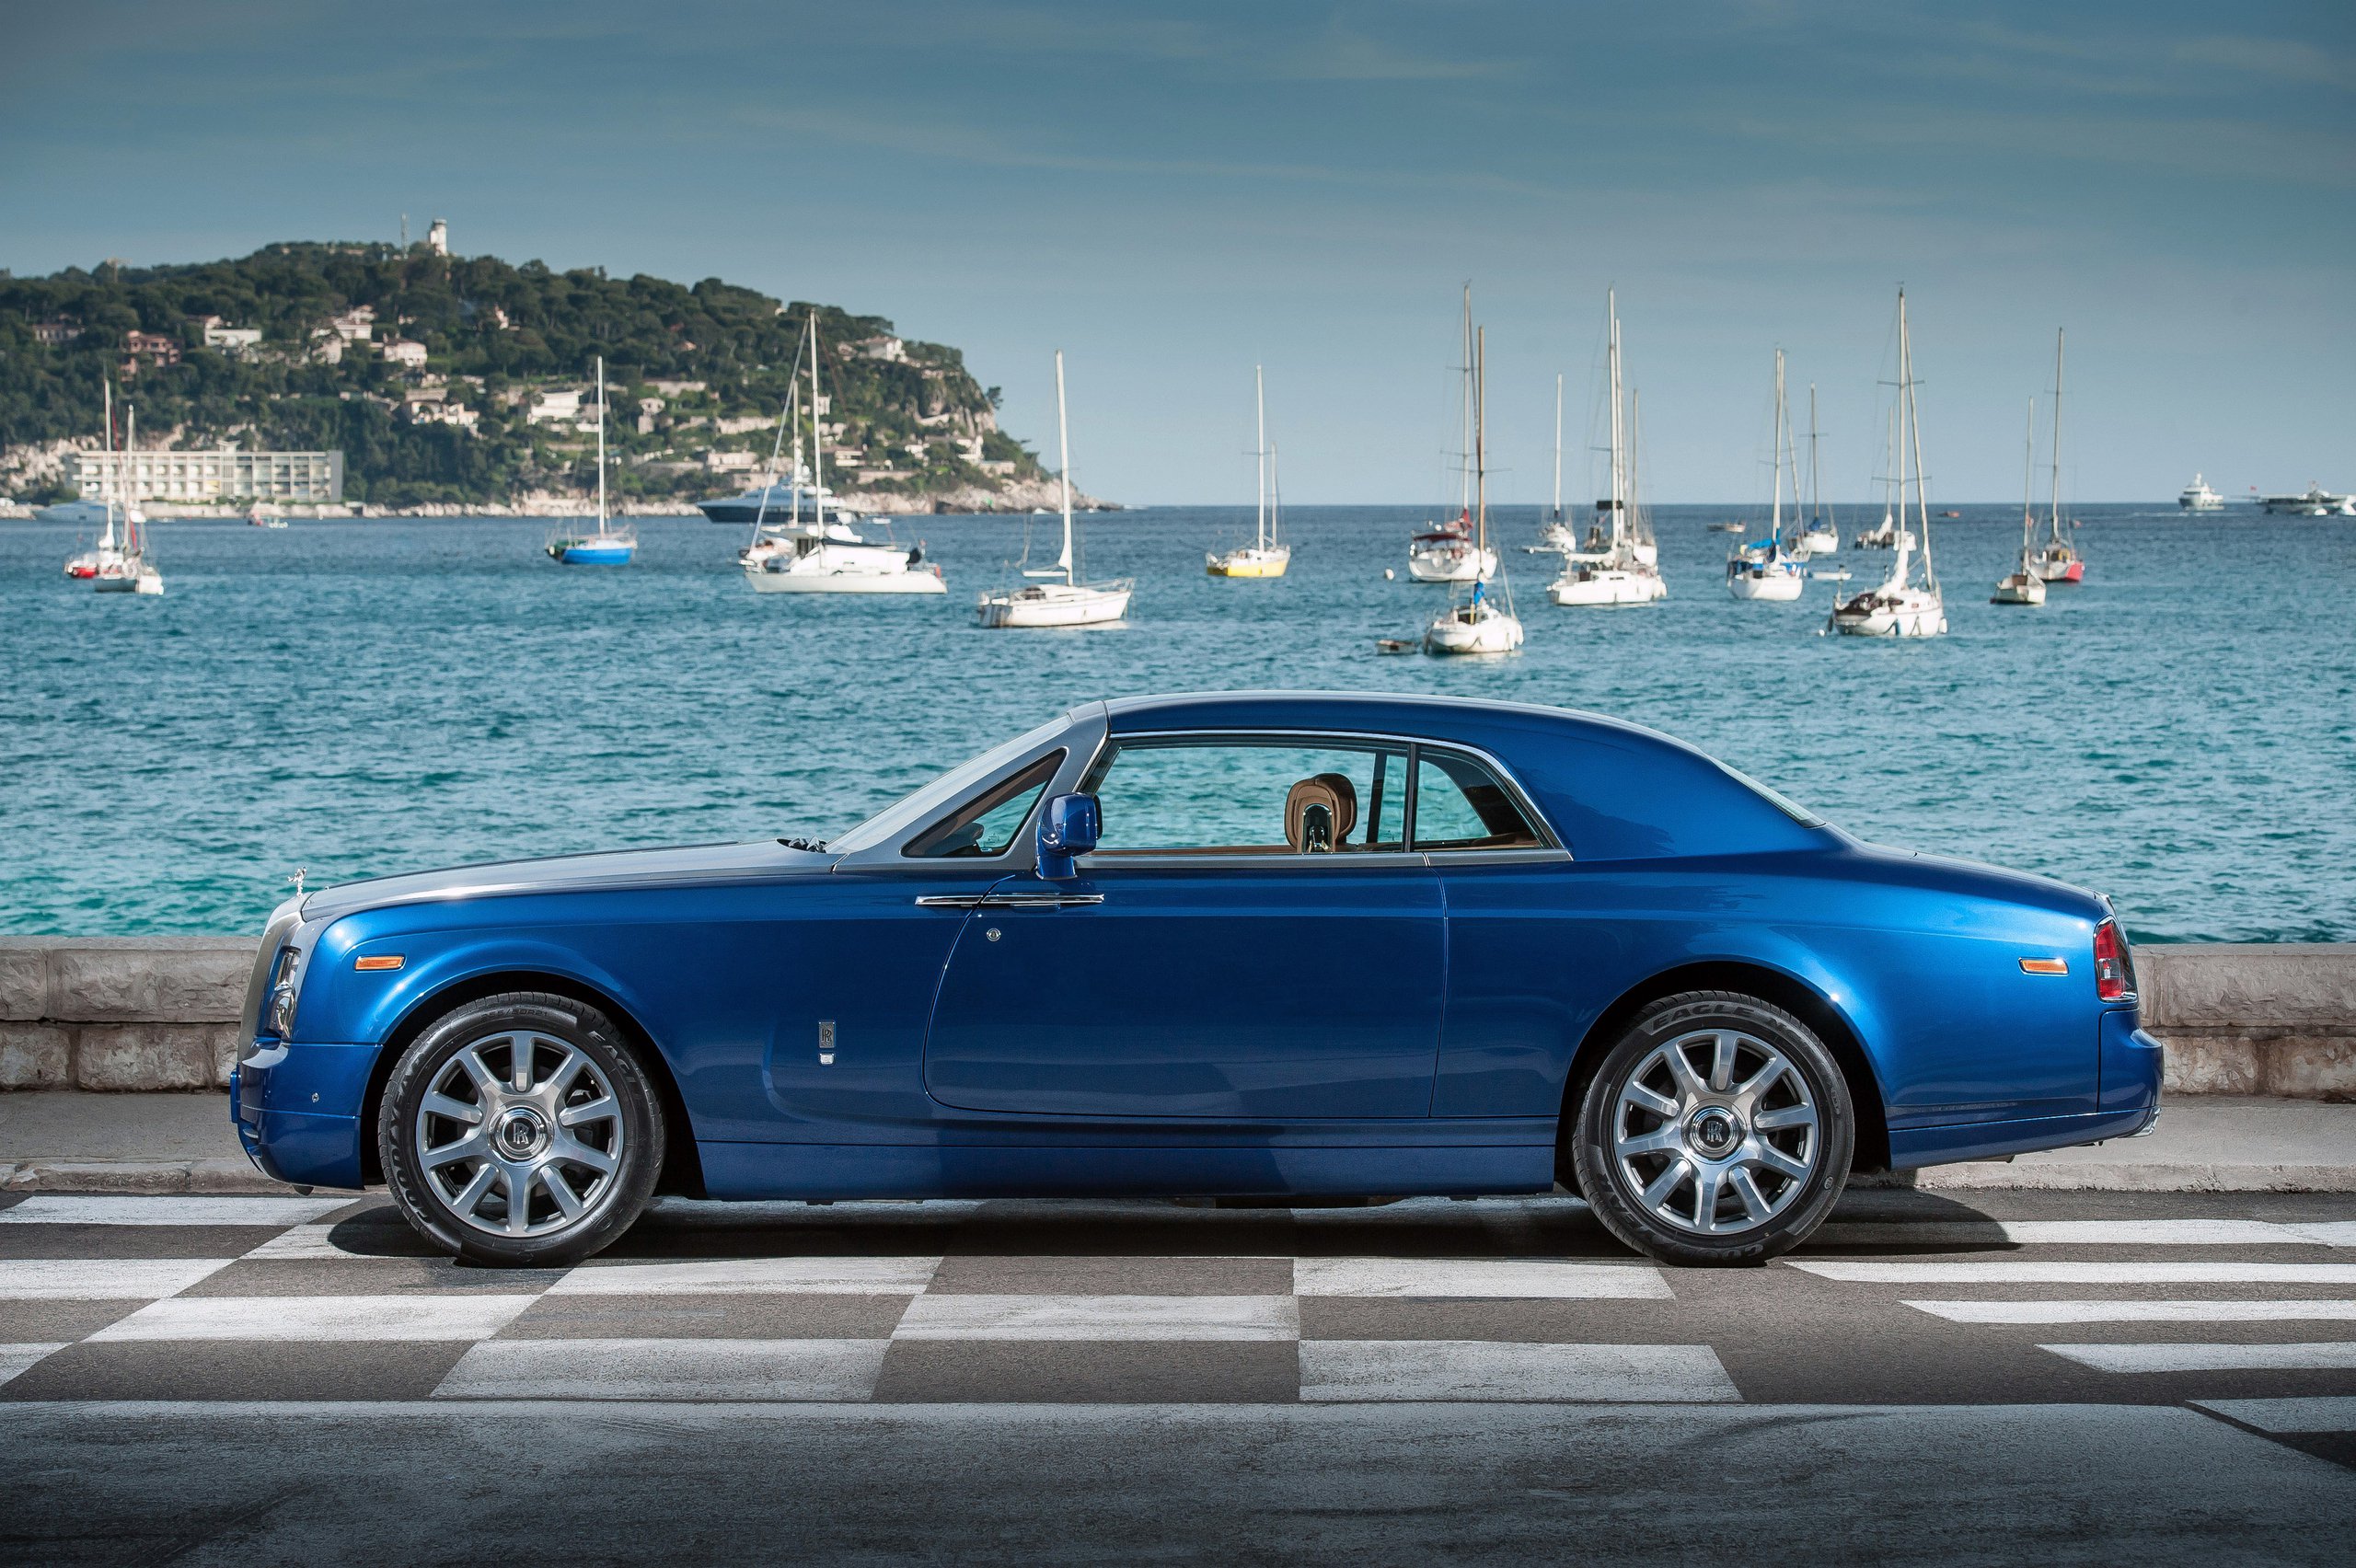 Rolls-Royce Phantom Coupe HD wallpapers, Desktop wallpaper - most viewed